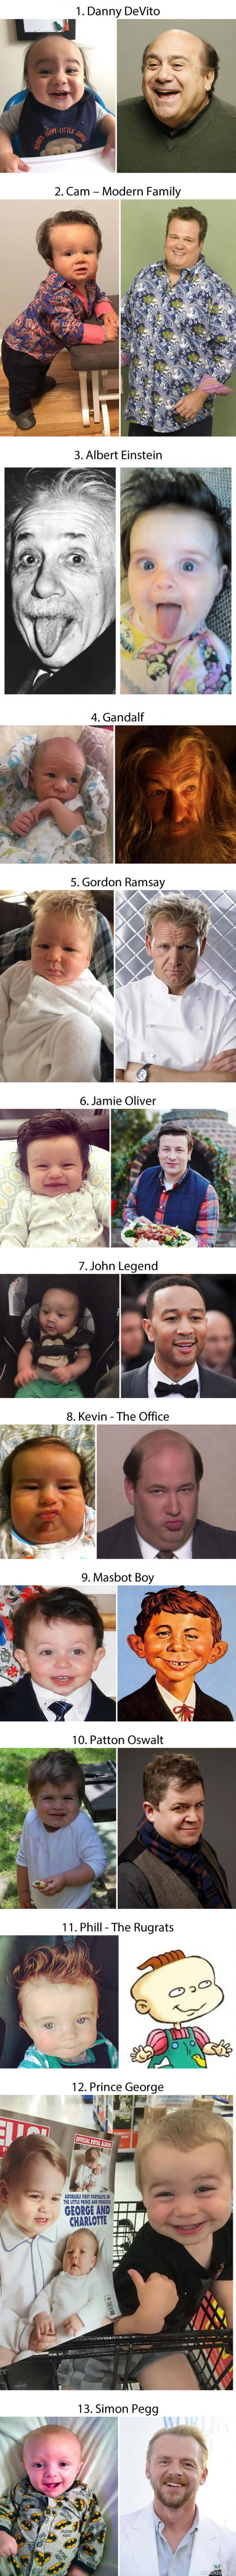 Babies & celebrities - Lookalikes.